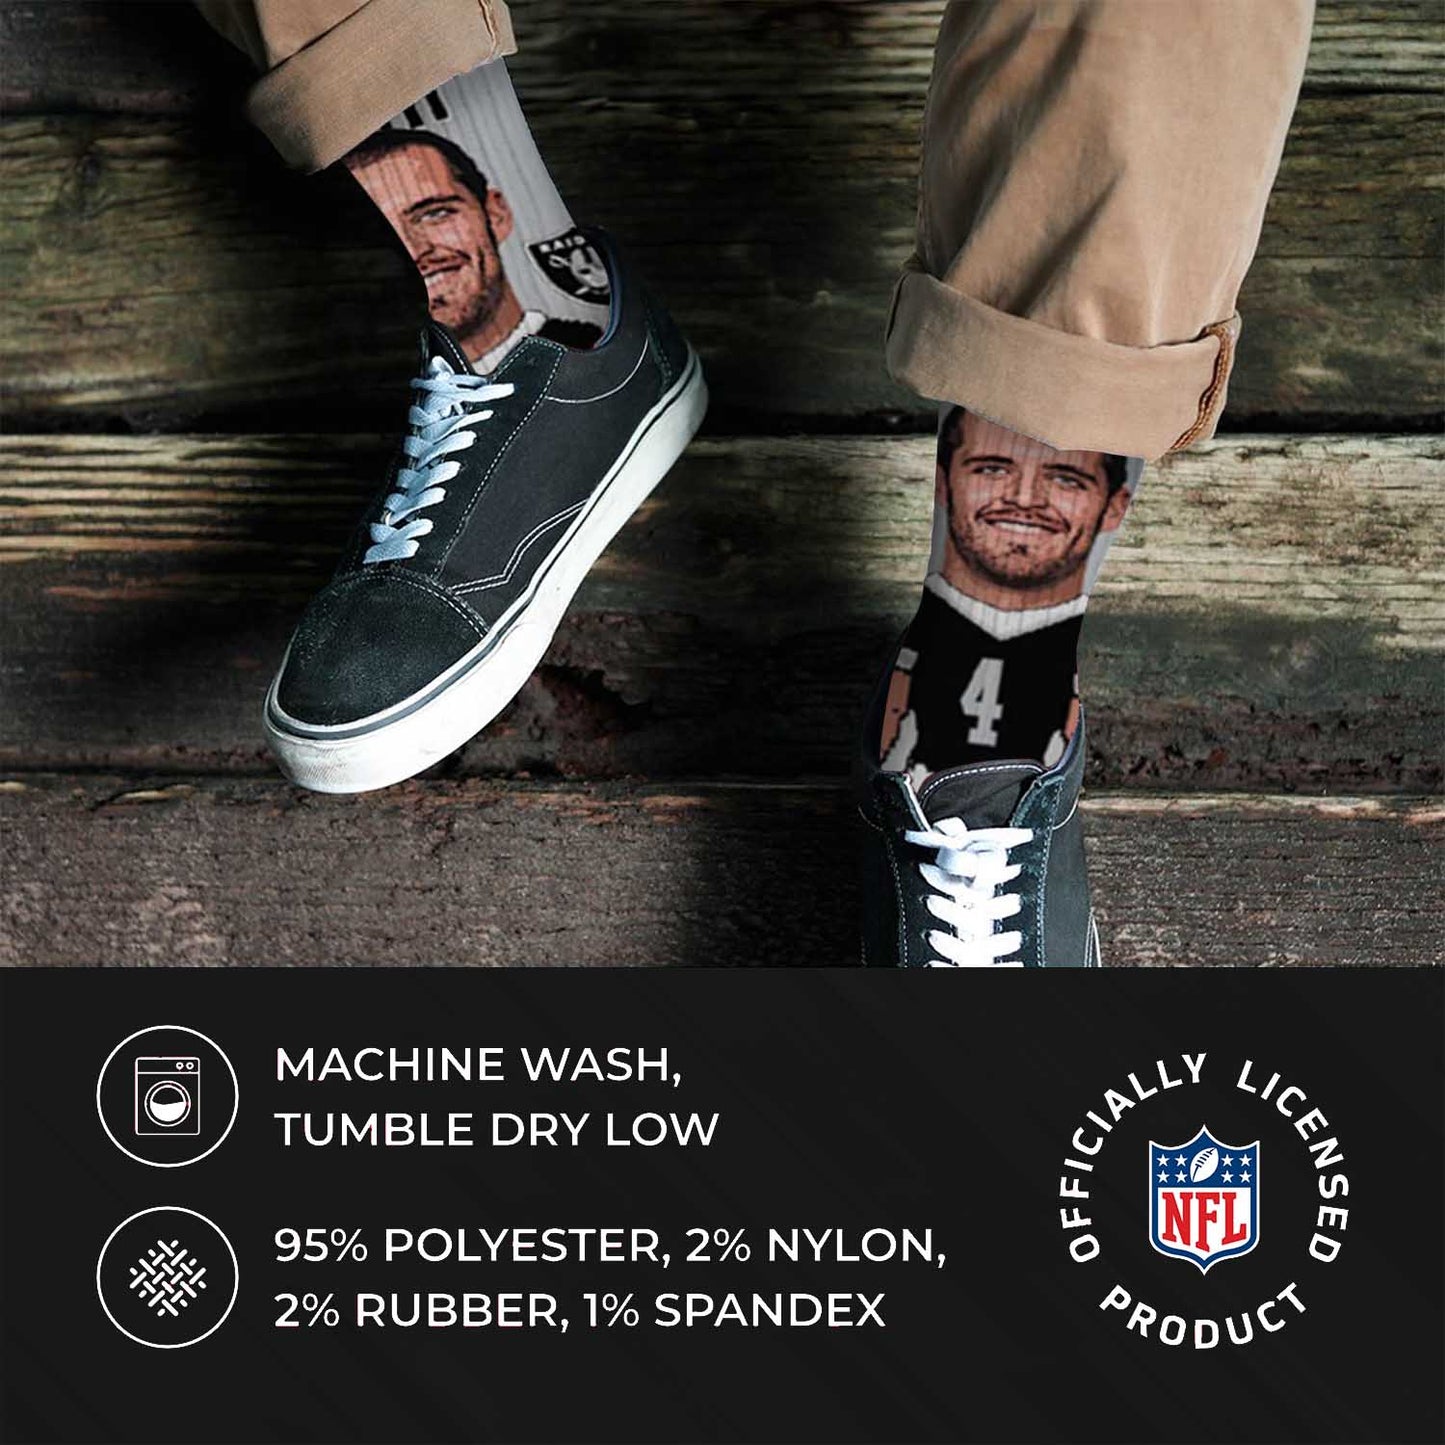 Las Vegas Raiders FBF NFL Adult V Curve MVP Player Crew Socks - Sport Gray #4